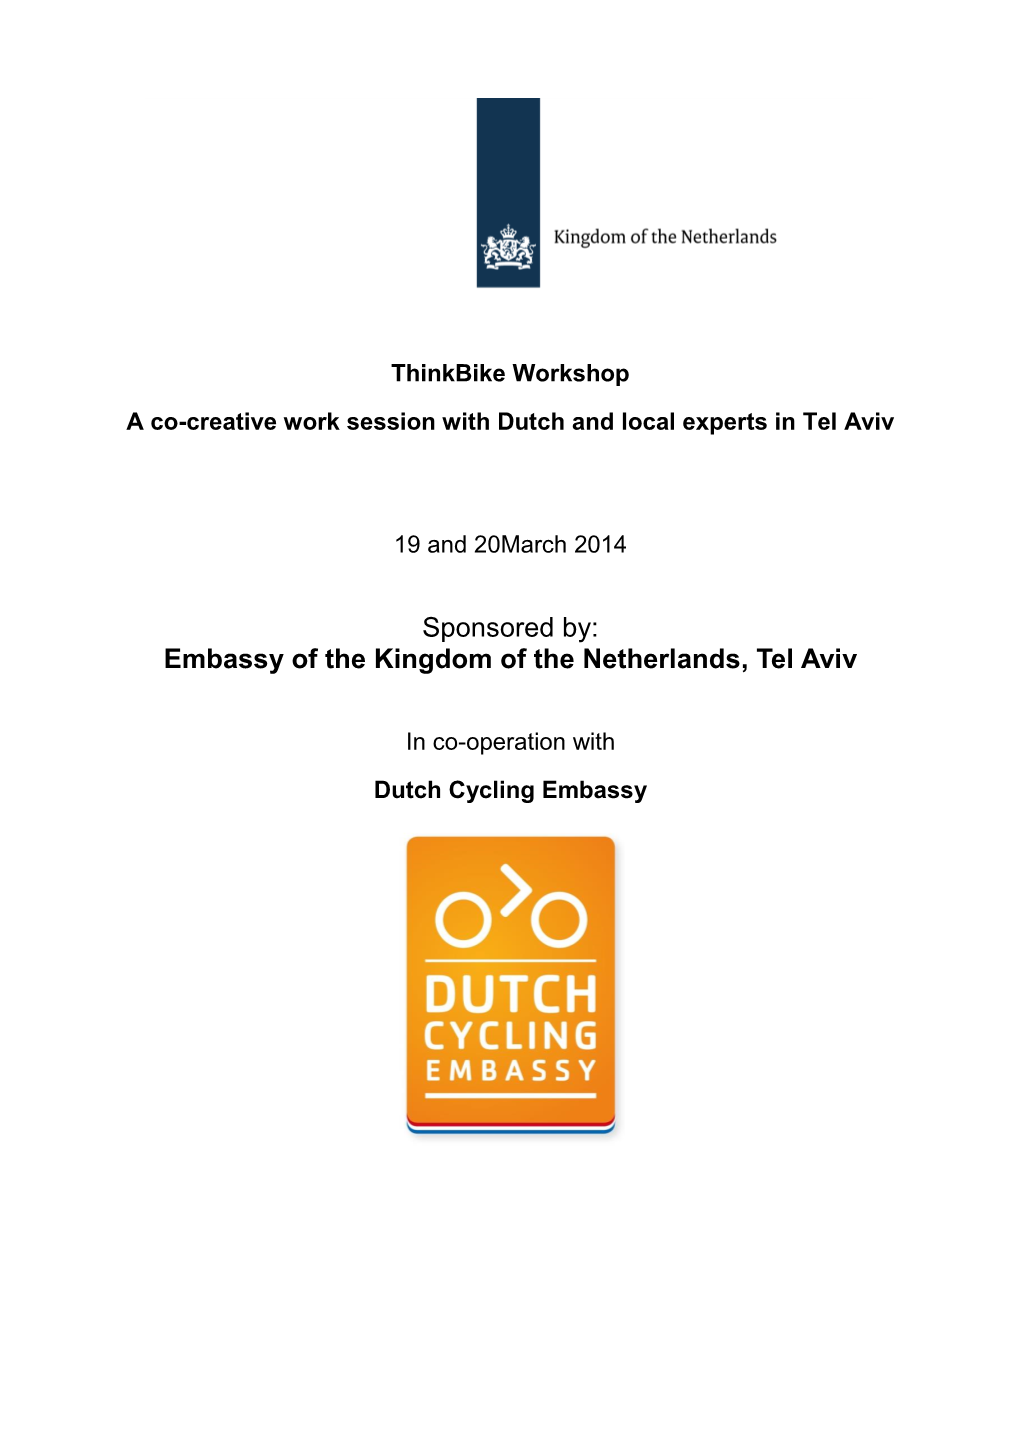 Sponsored By: Embassy of the Kingdom of the Netherlands, Tel Aviv